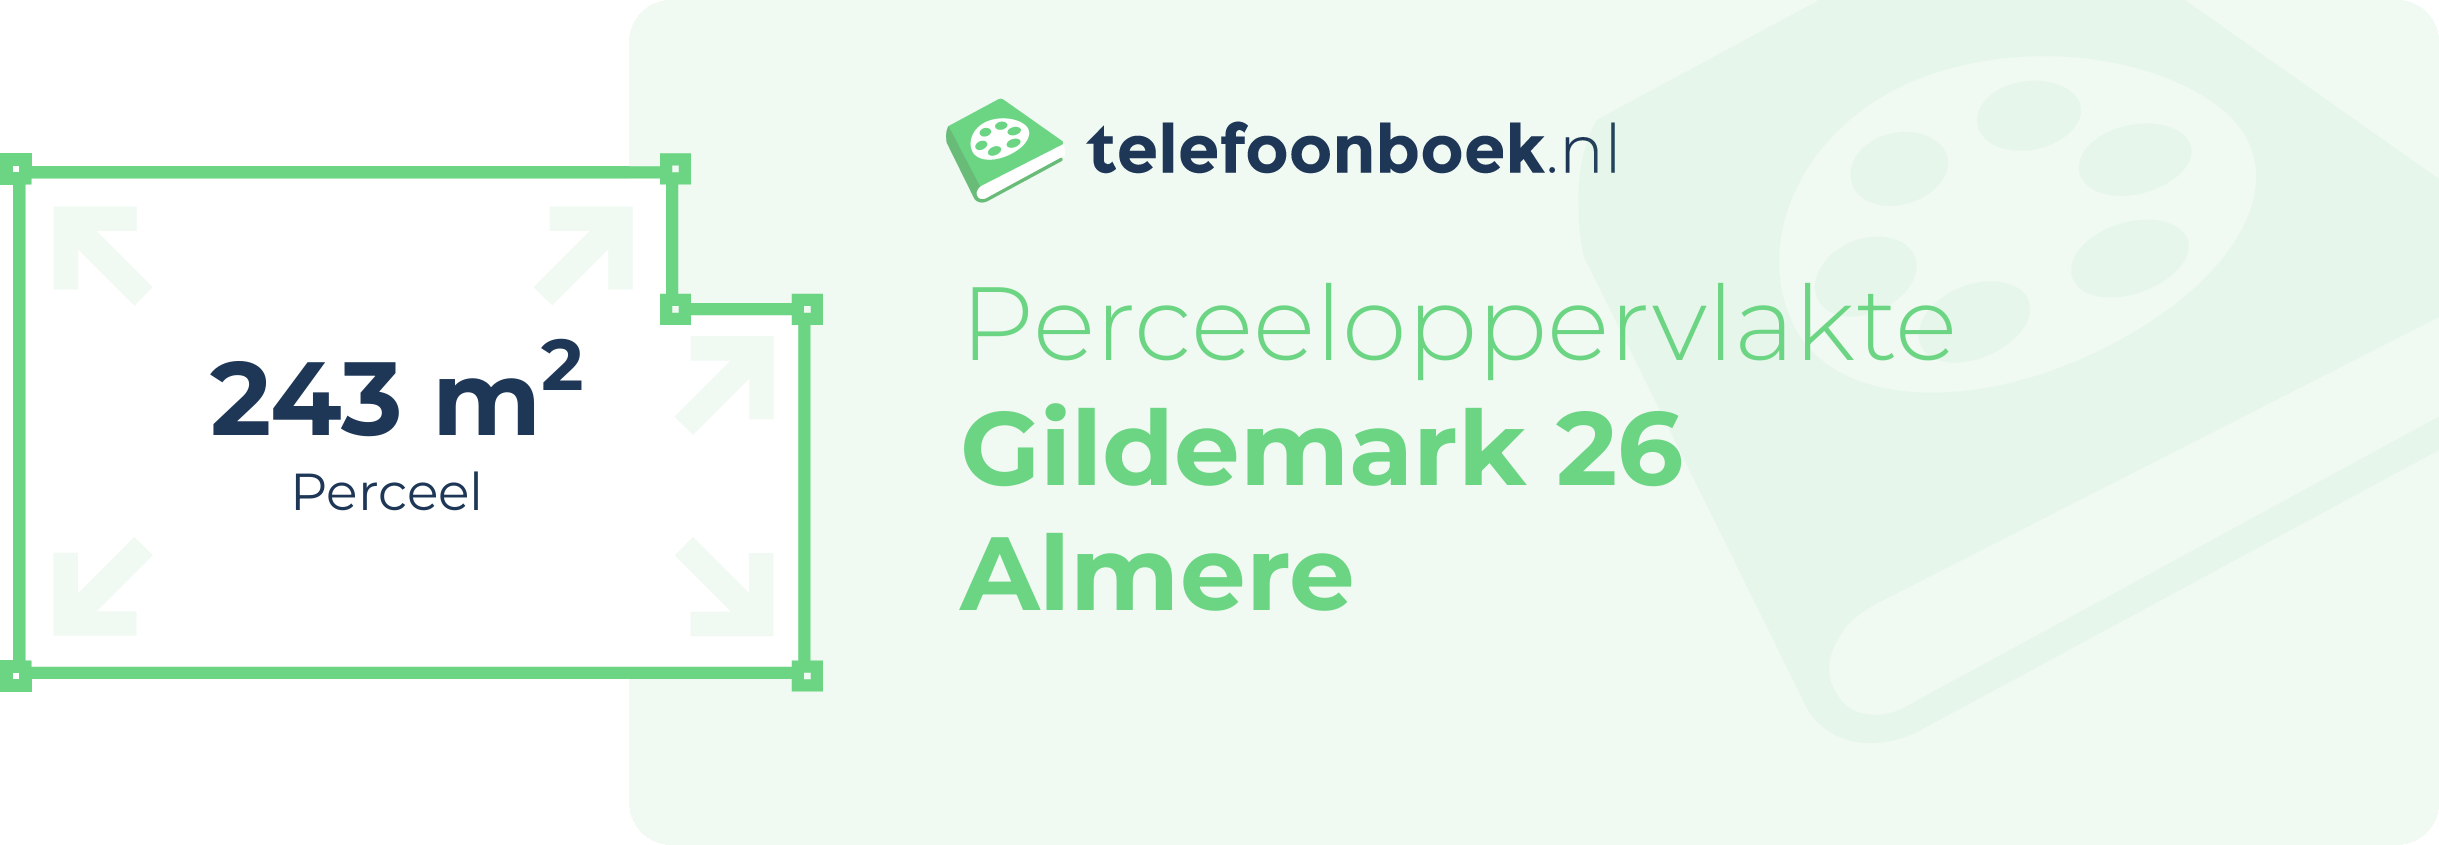 Perceeloppervlakte Gildemark 26 Almere